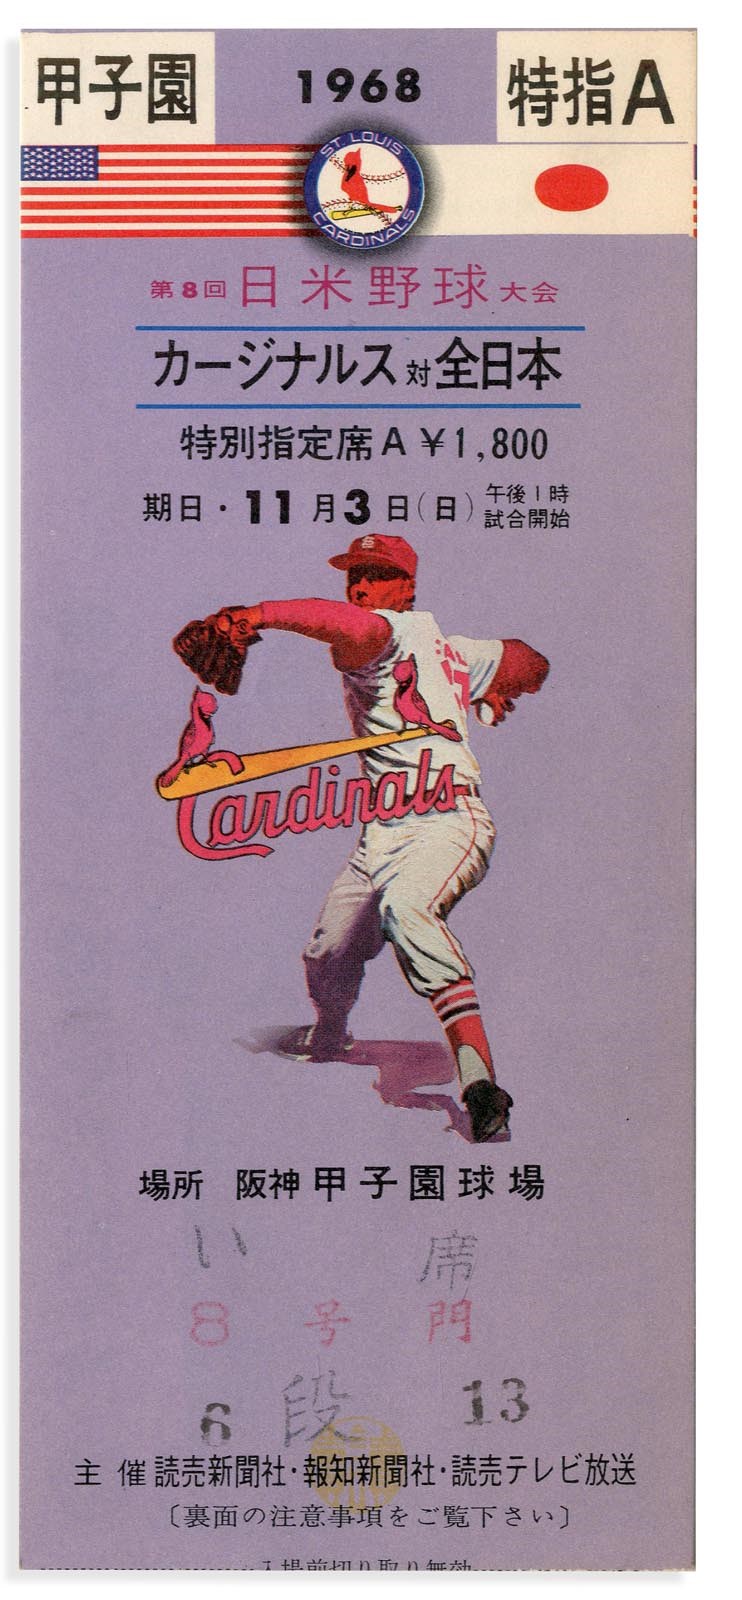 St. Louis Cardinals - 1968 St. Louis Cardinals Tour of Japan Ticket and Envelope